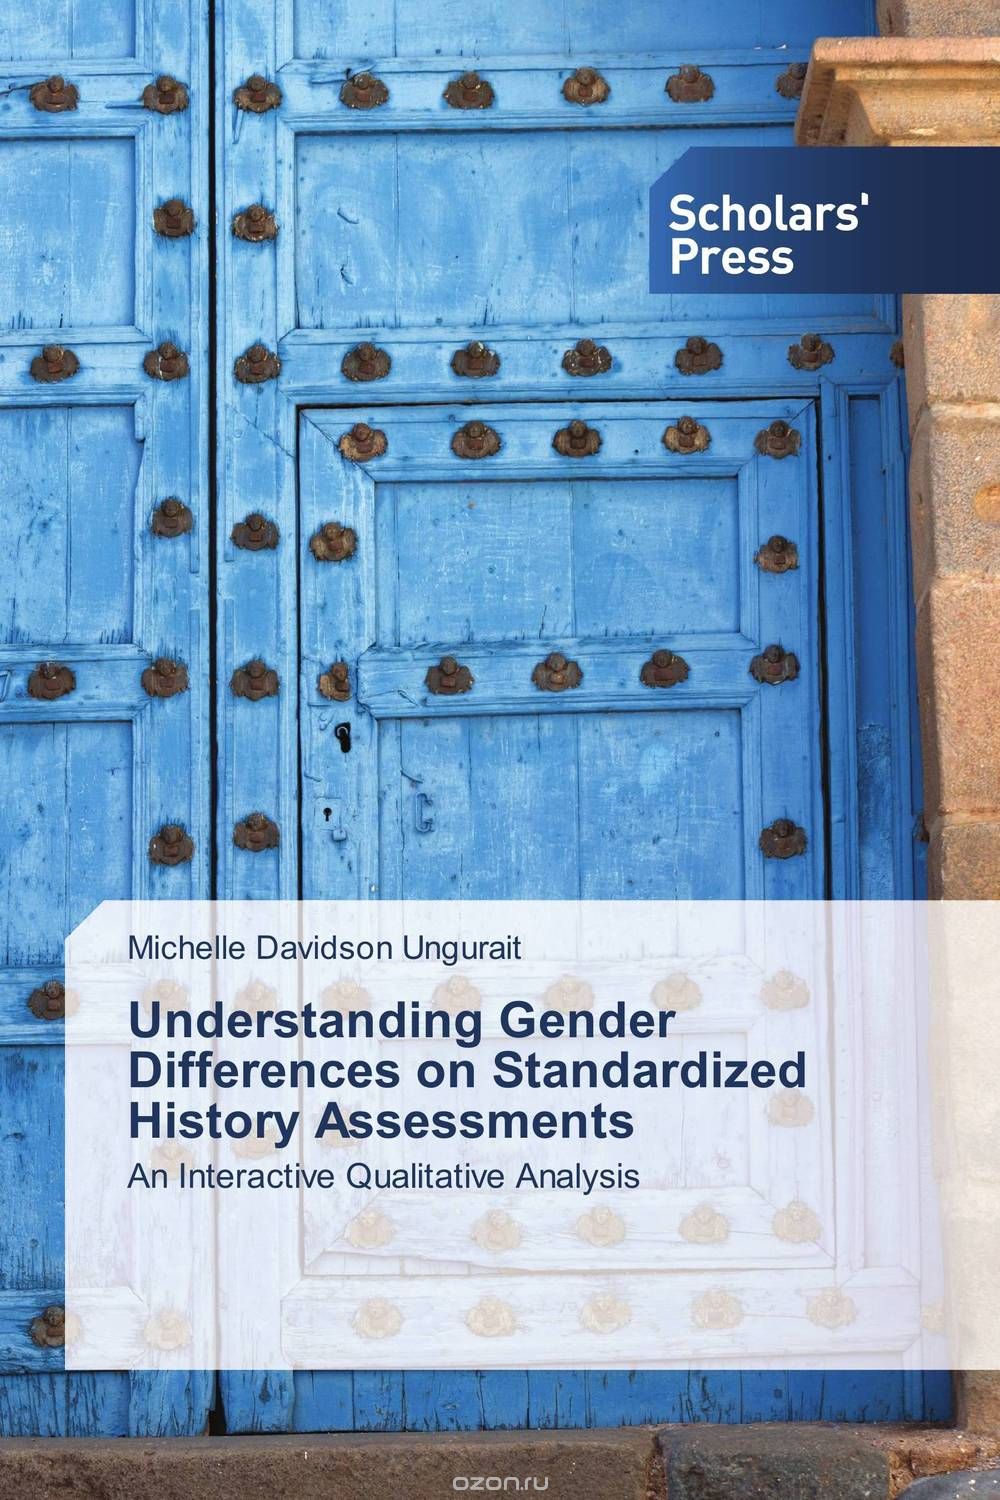 Скачать книгу "Understanding Gender Differences on Standardized History Assessments"